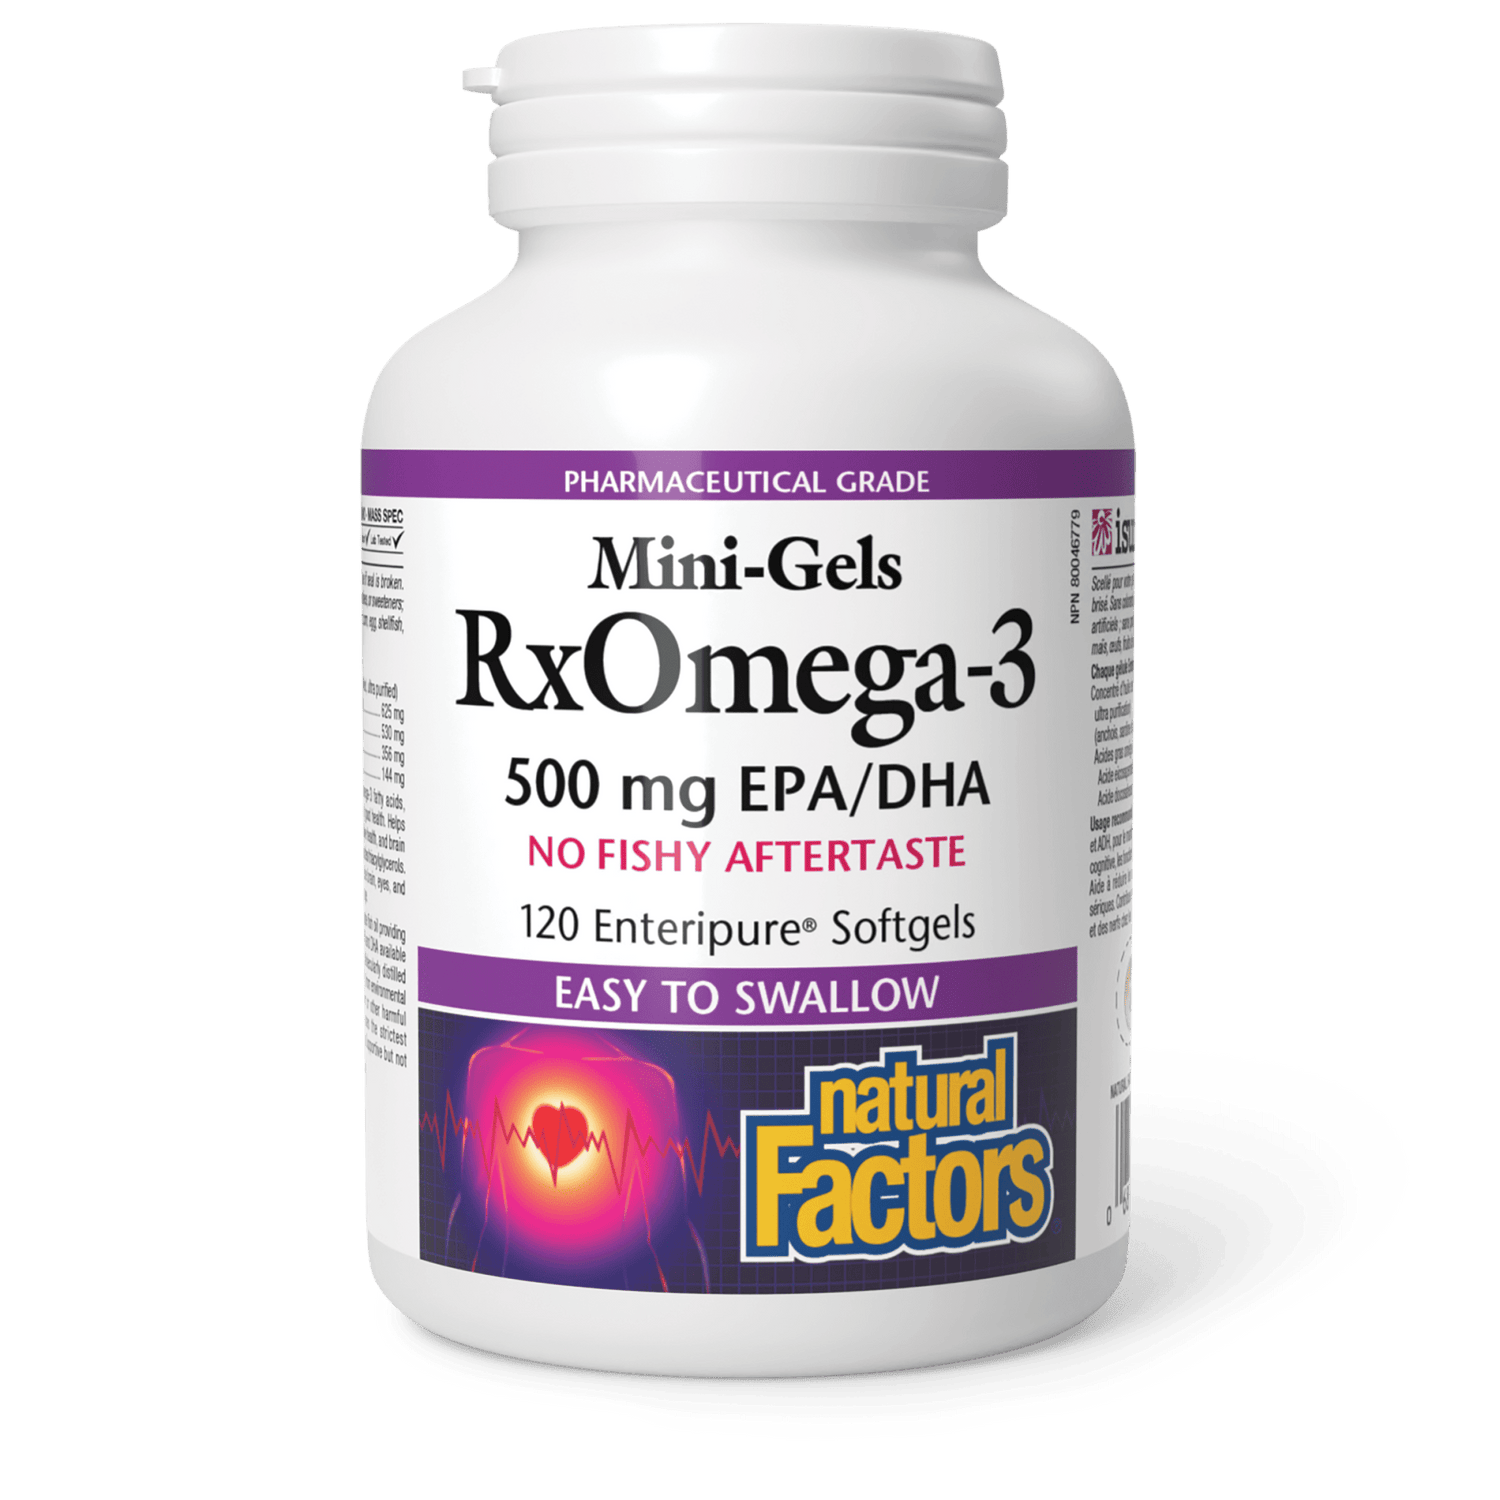 RxOmega-3 Mini-Gels 500 mg, Natural Factors|v|image|35495